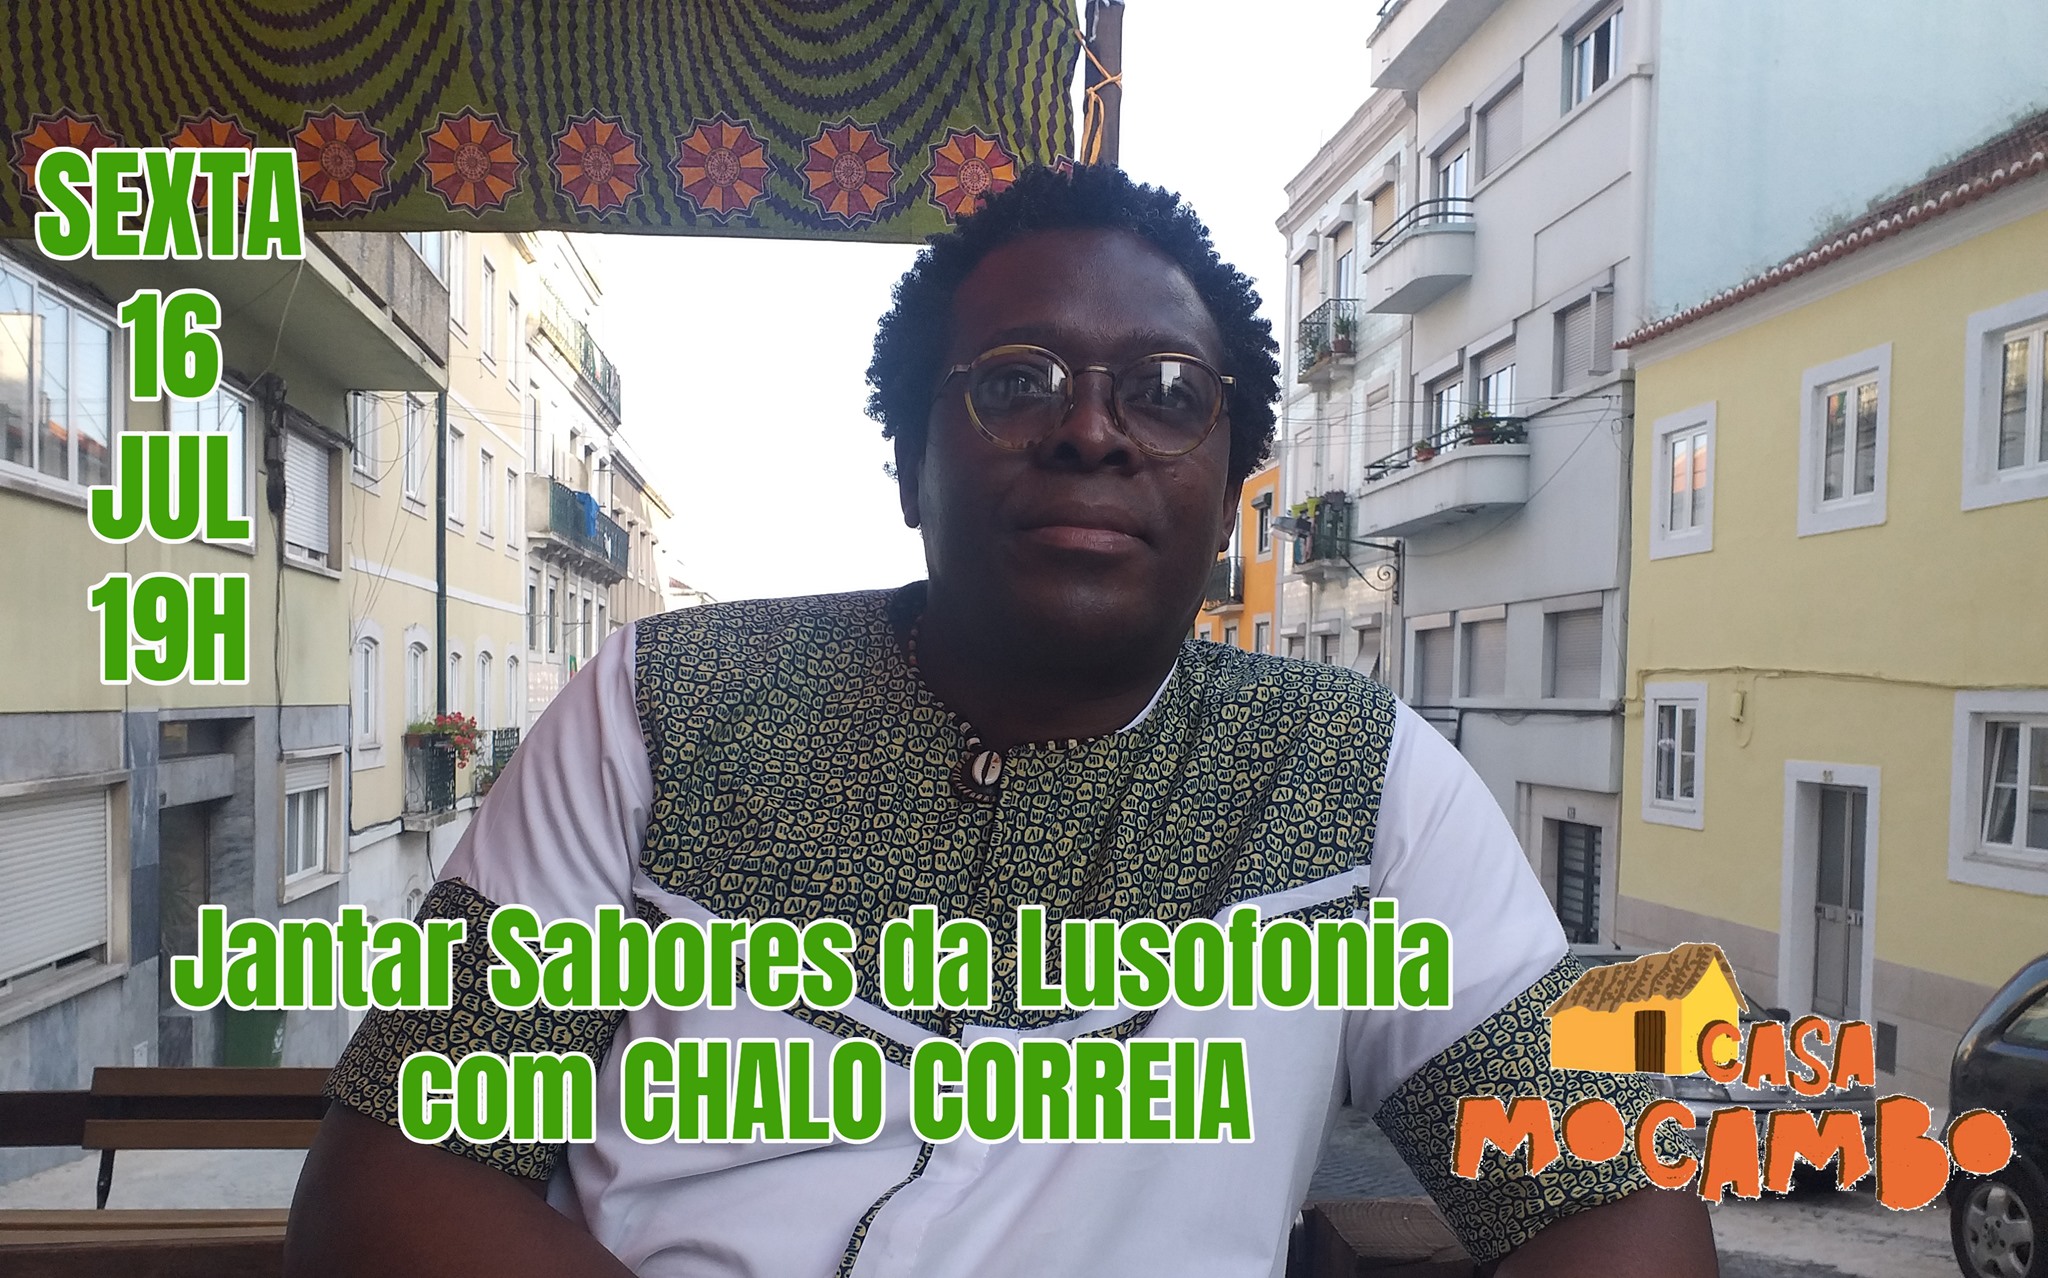 Jantar Sabores da Lusofonia com Chalo Correia